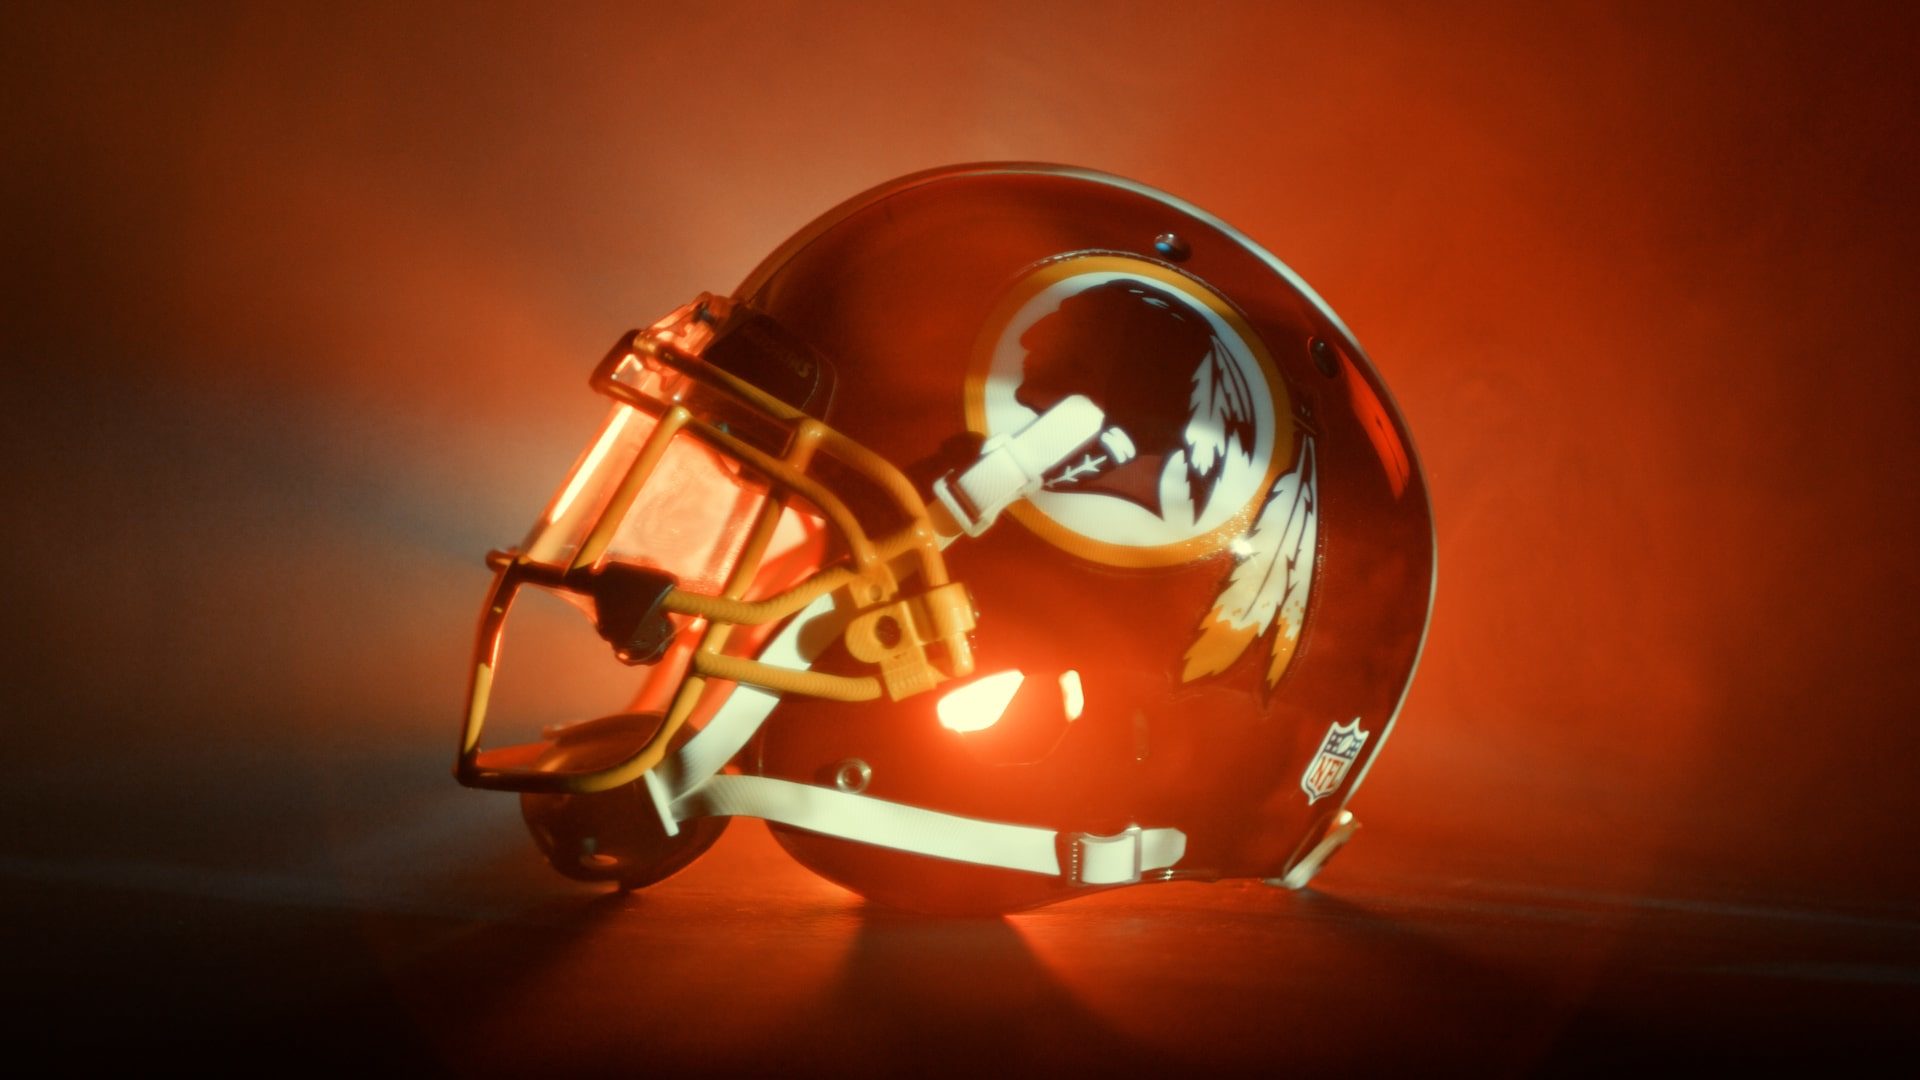 Washington Commanders: The Brand Evolution - 2nd Generation Redskins Helmet